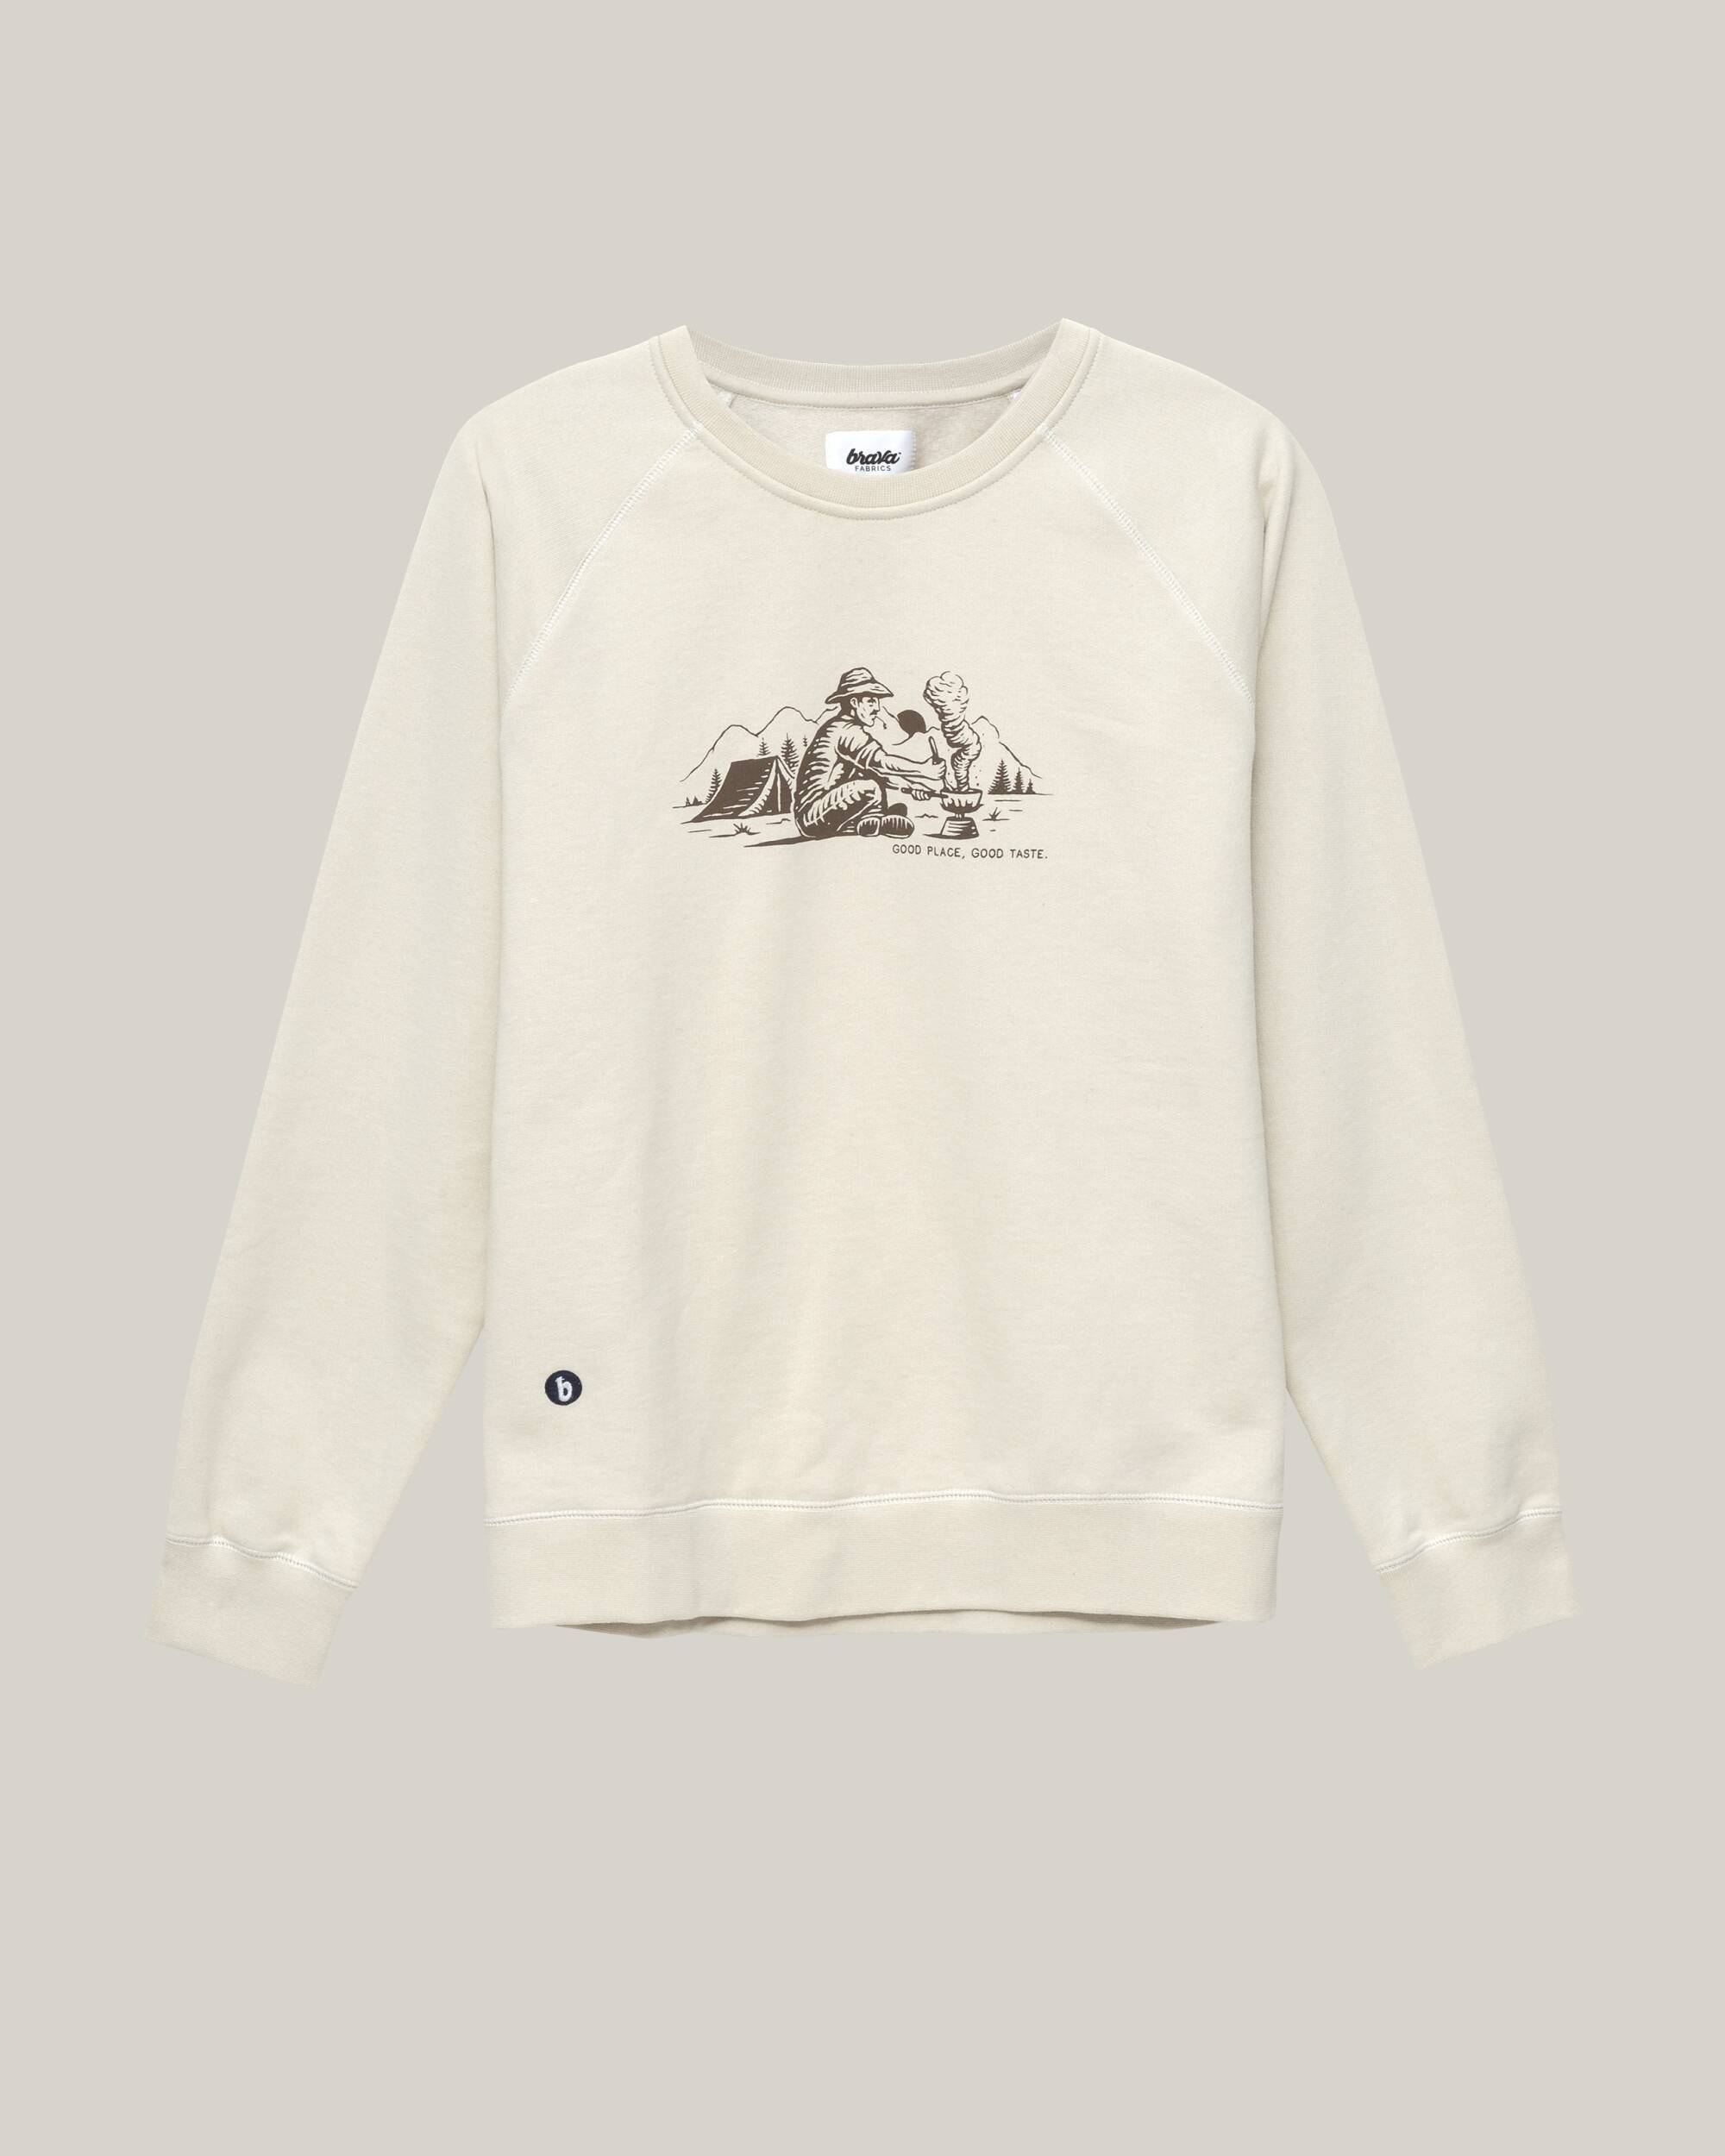 Sweatshirt "Good Taste" in white made from 100% organic cotton from Brava Fabrics